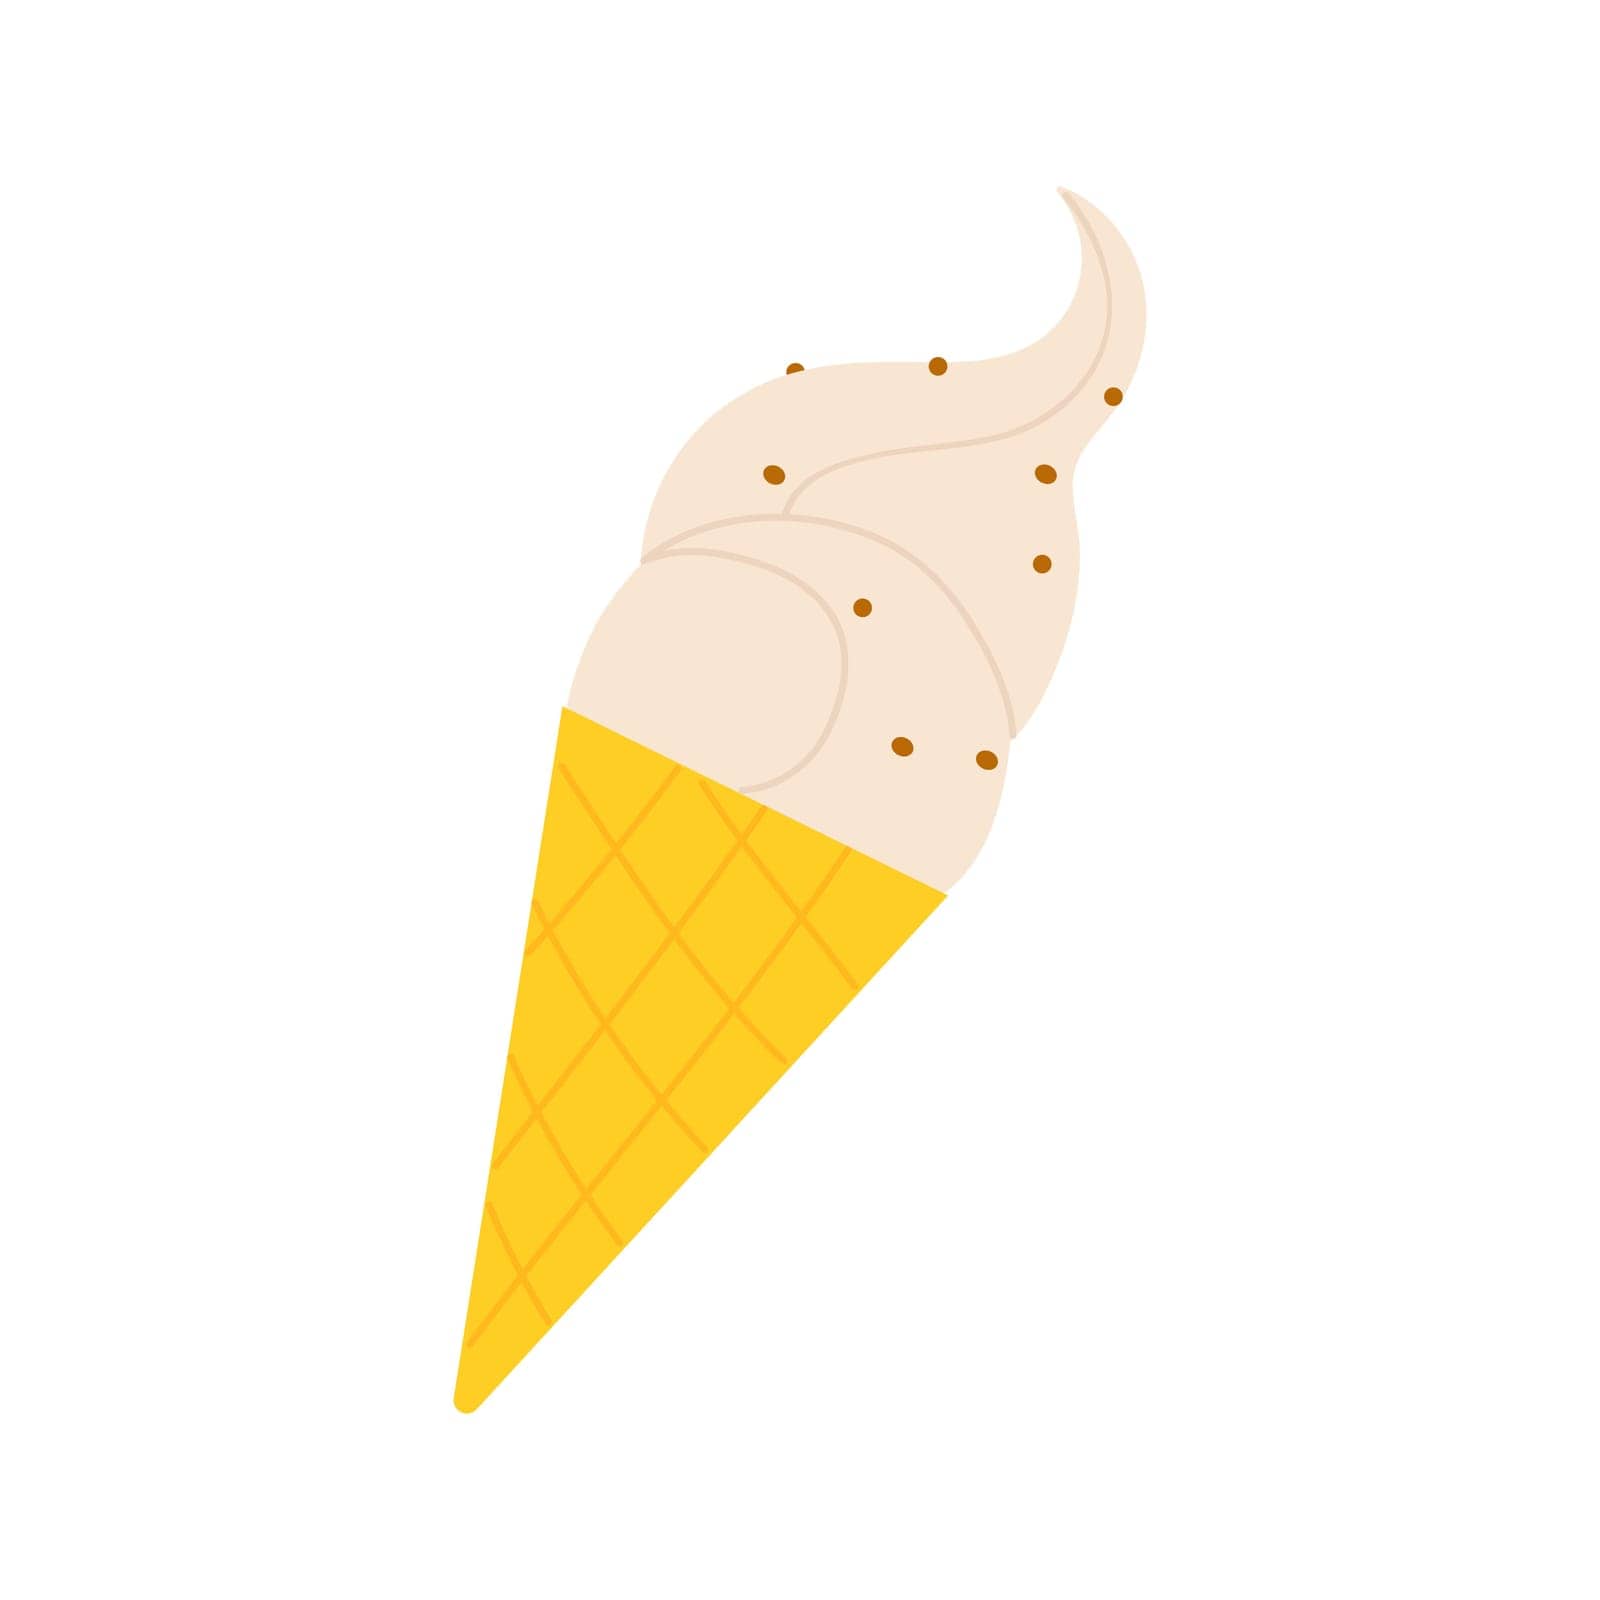 Sweet cone ice cream by Popov